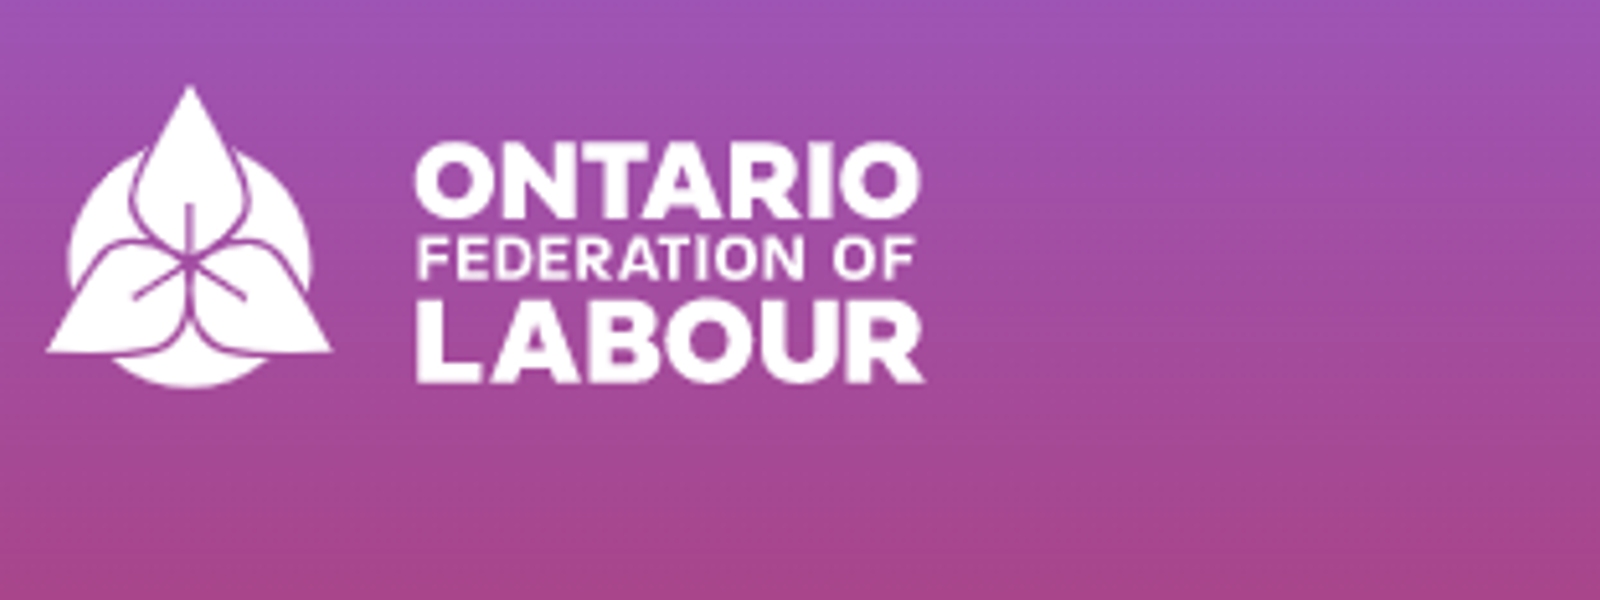 End repression in SL - Ontario Federation of Labor